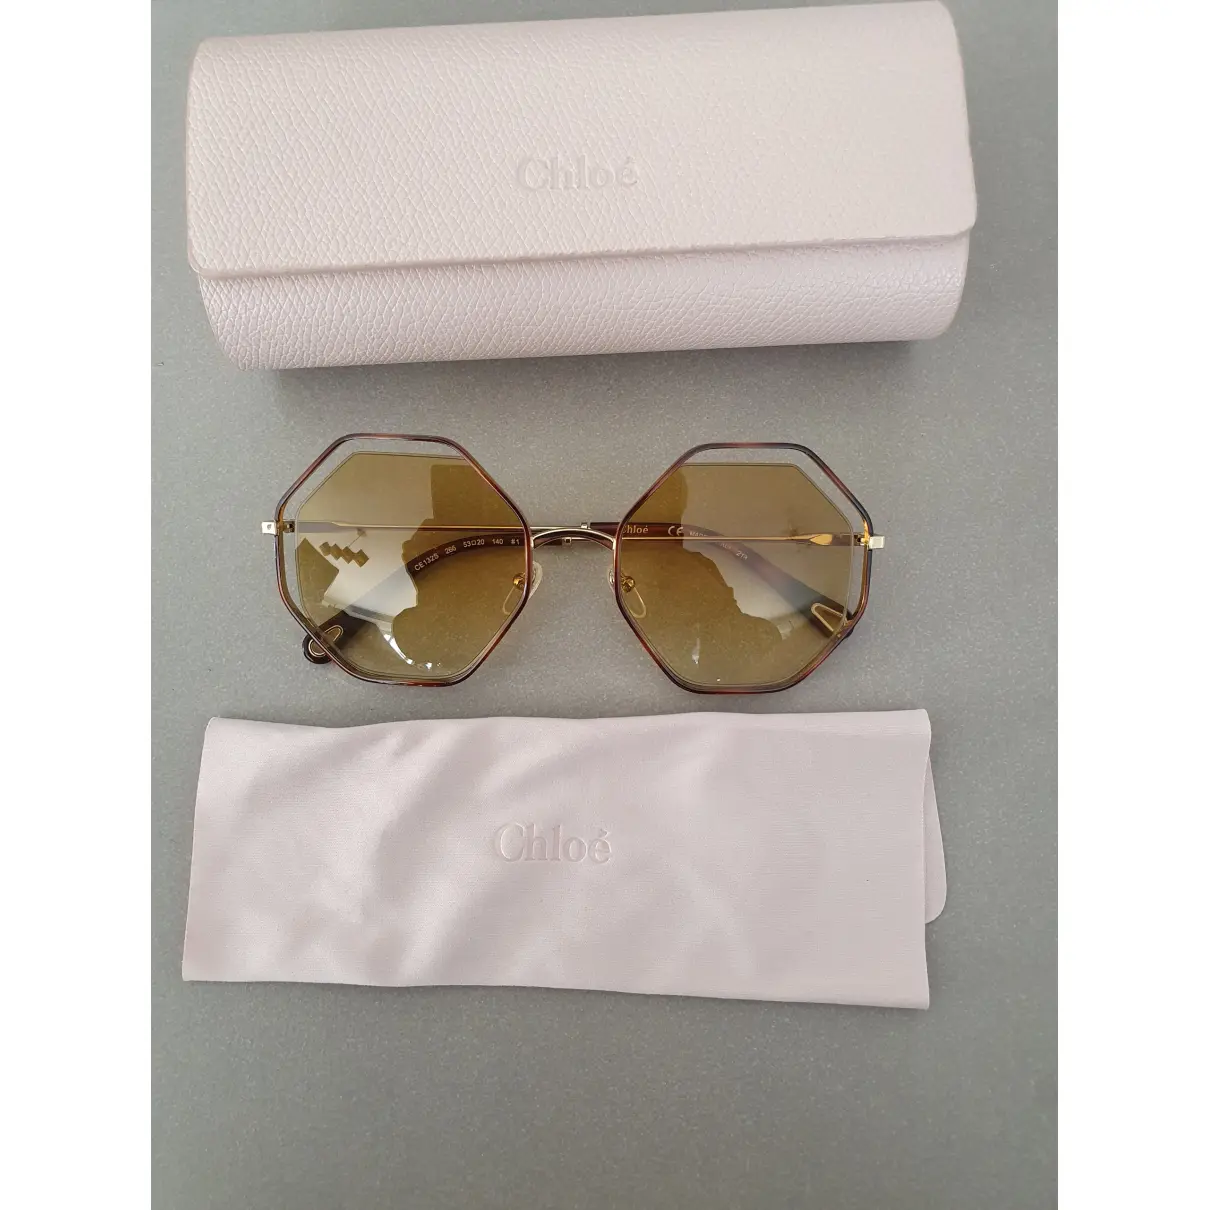 Buy Chloé Poppy sunglasses online